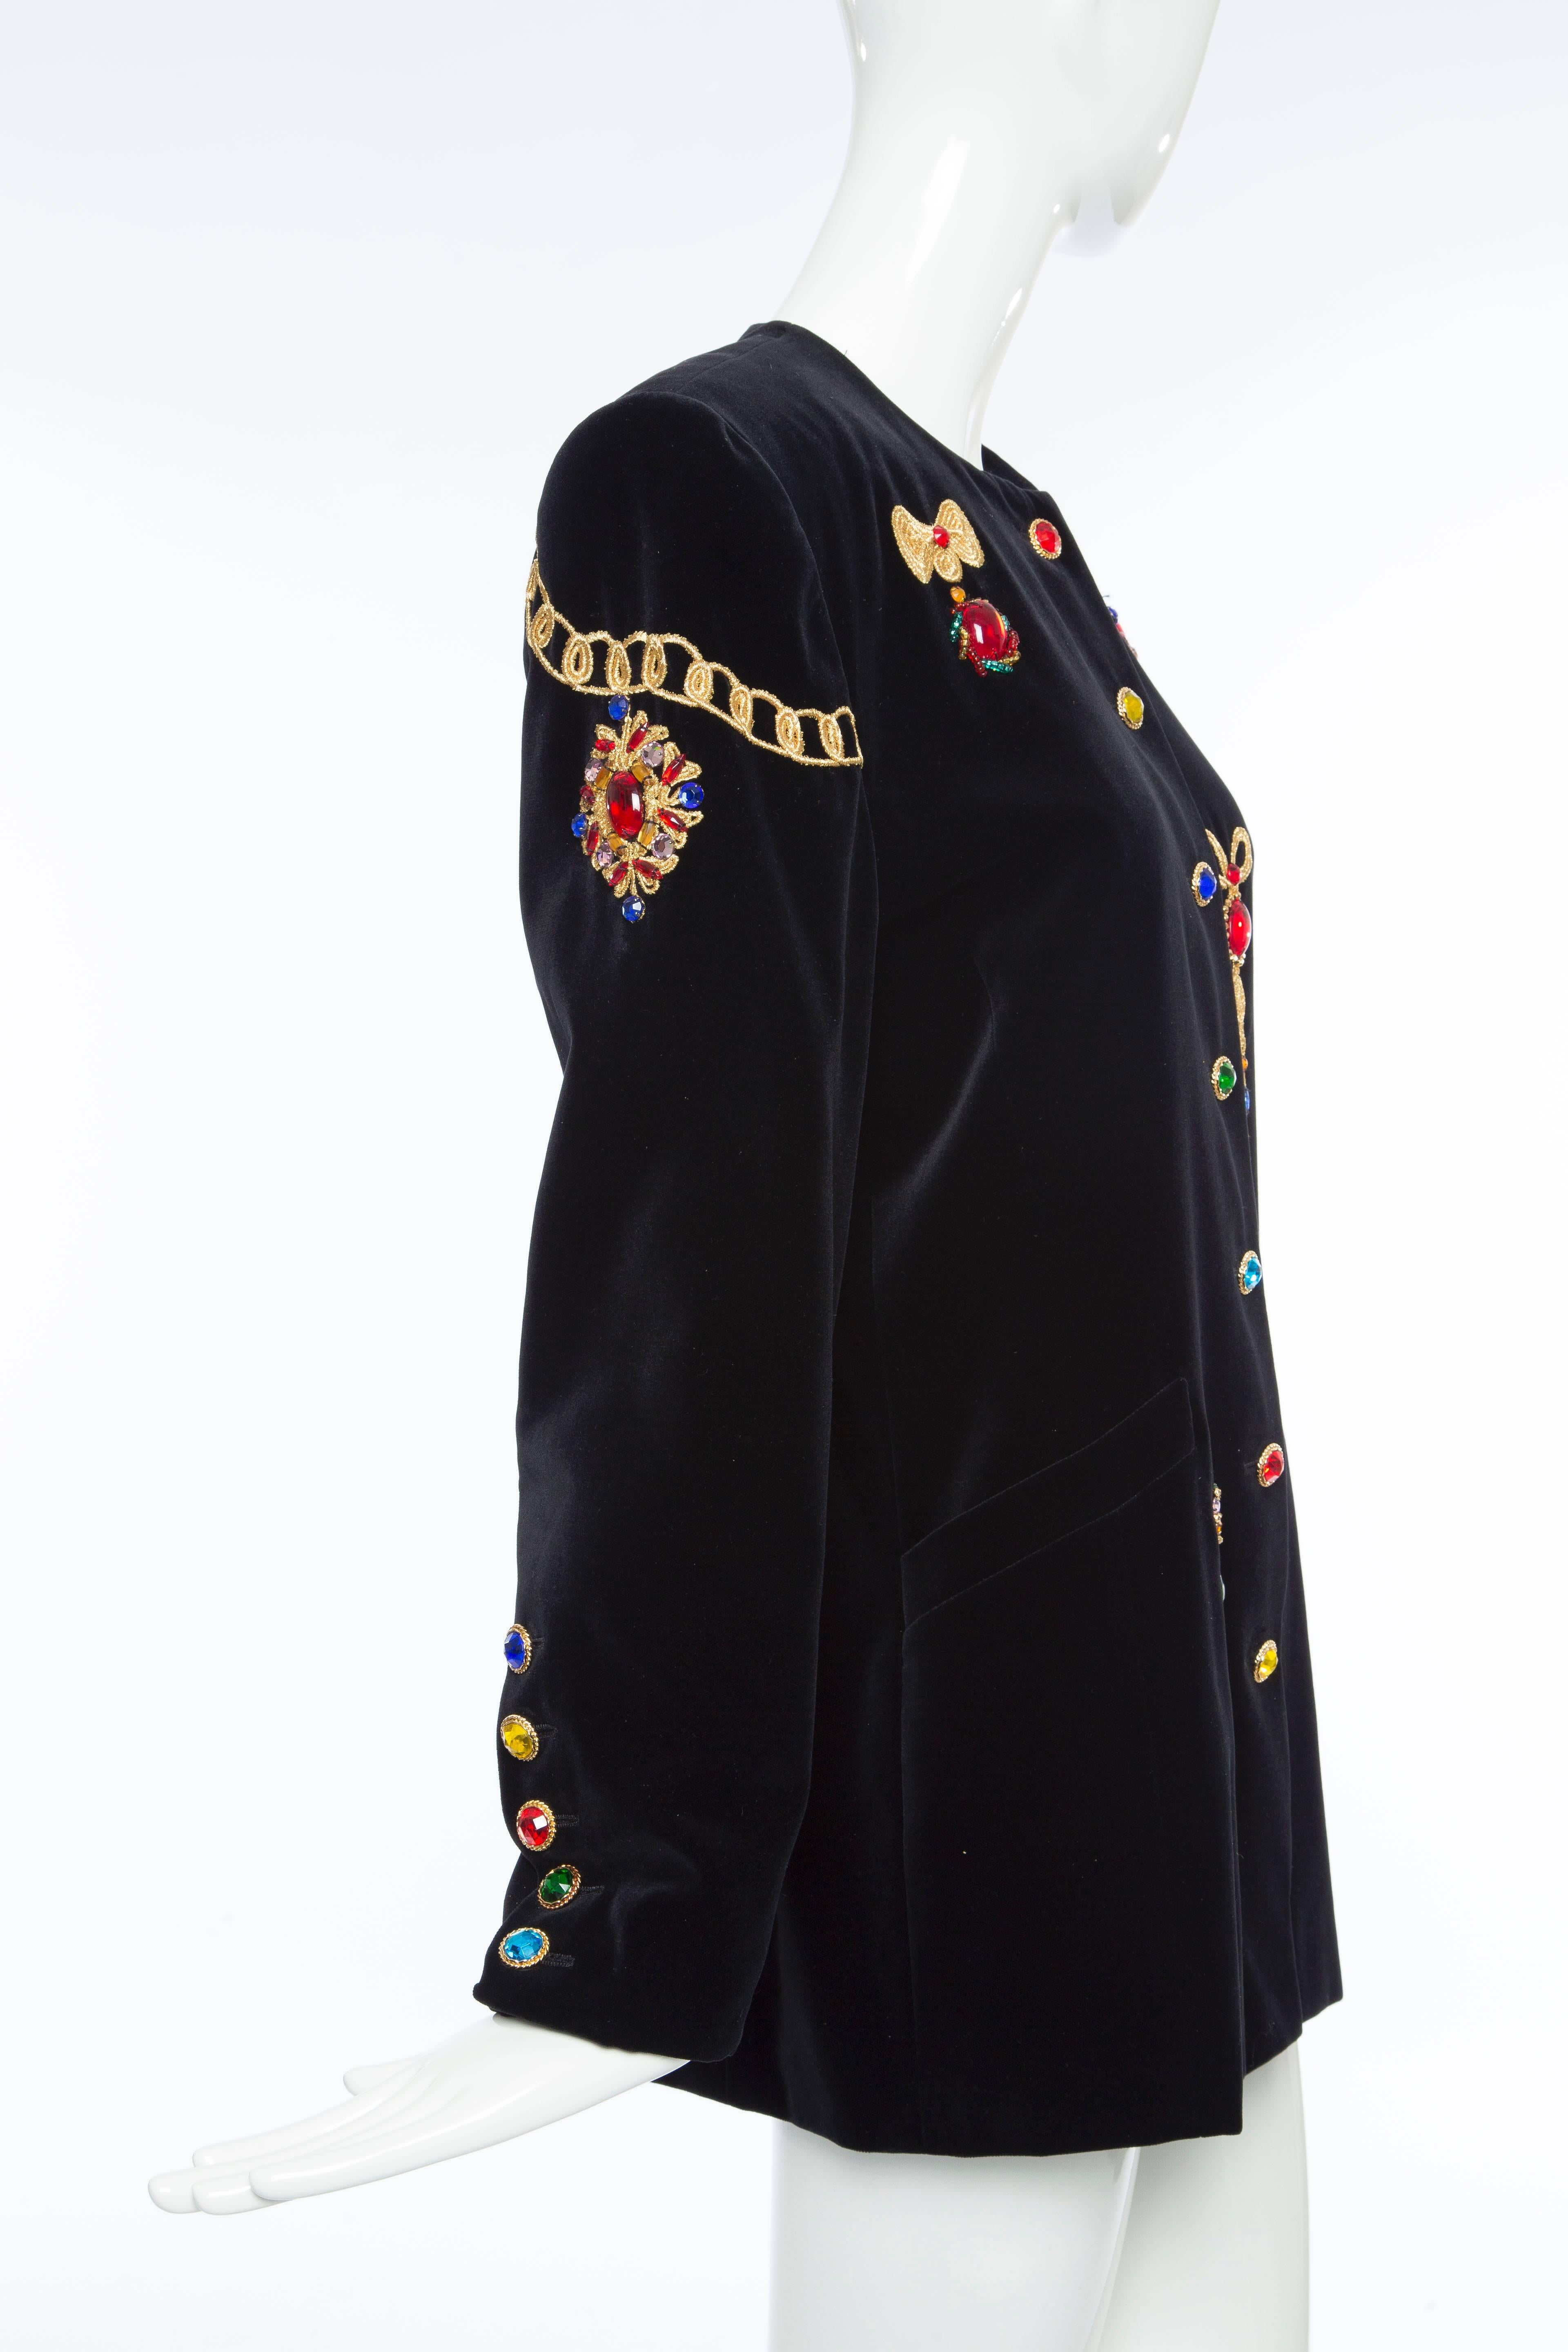 Escada by Margaretha Ley Black Embellished Velvet Jacket, Circa 1980's 1